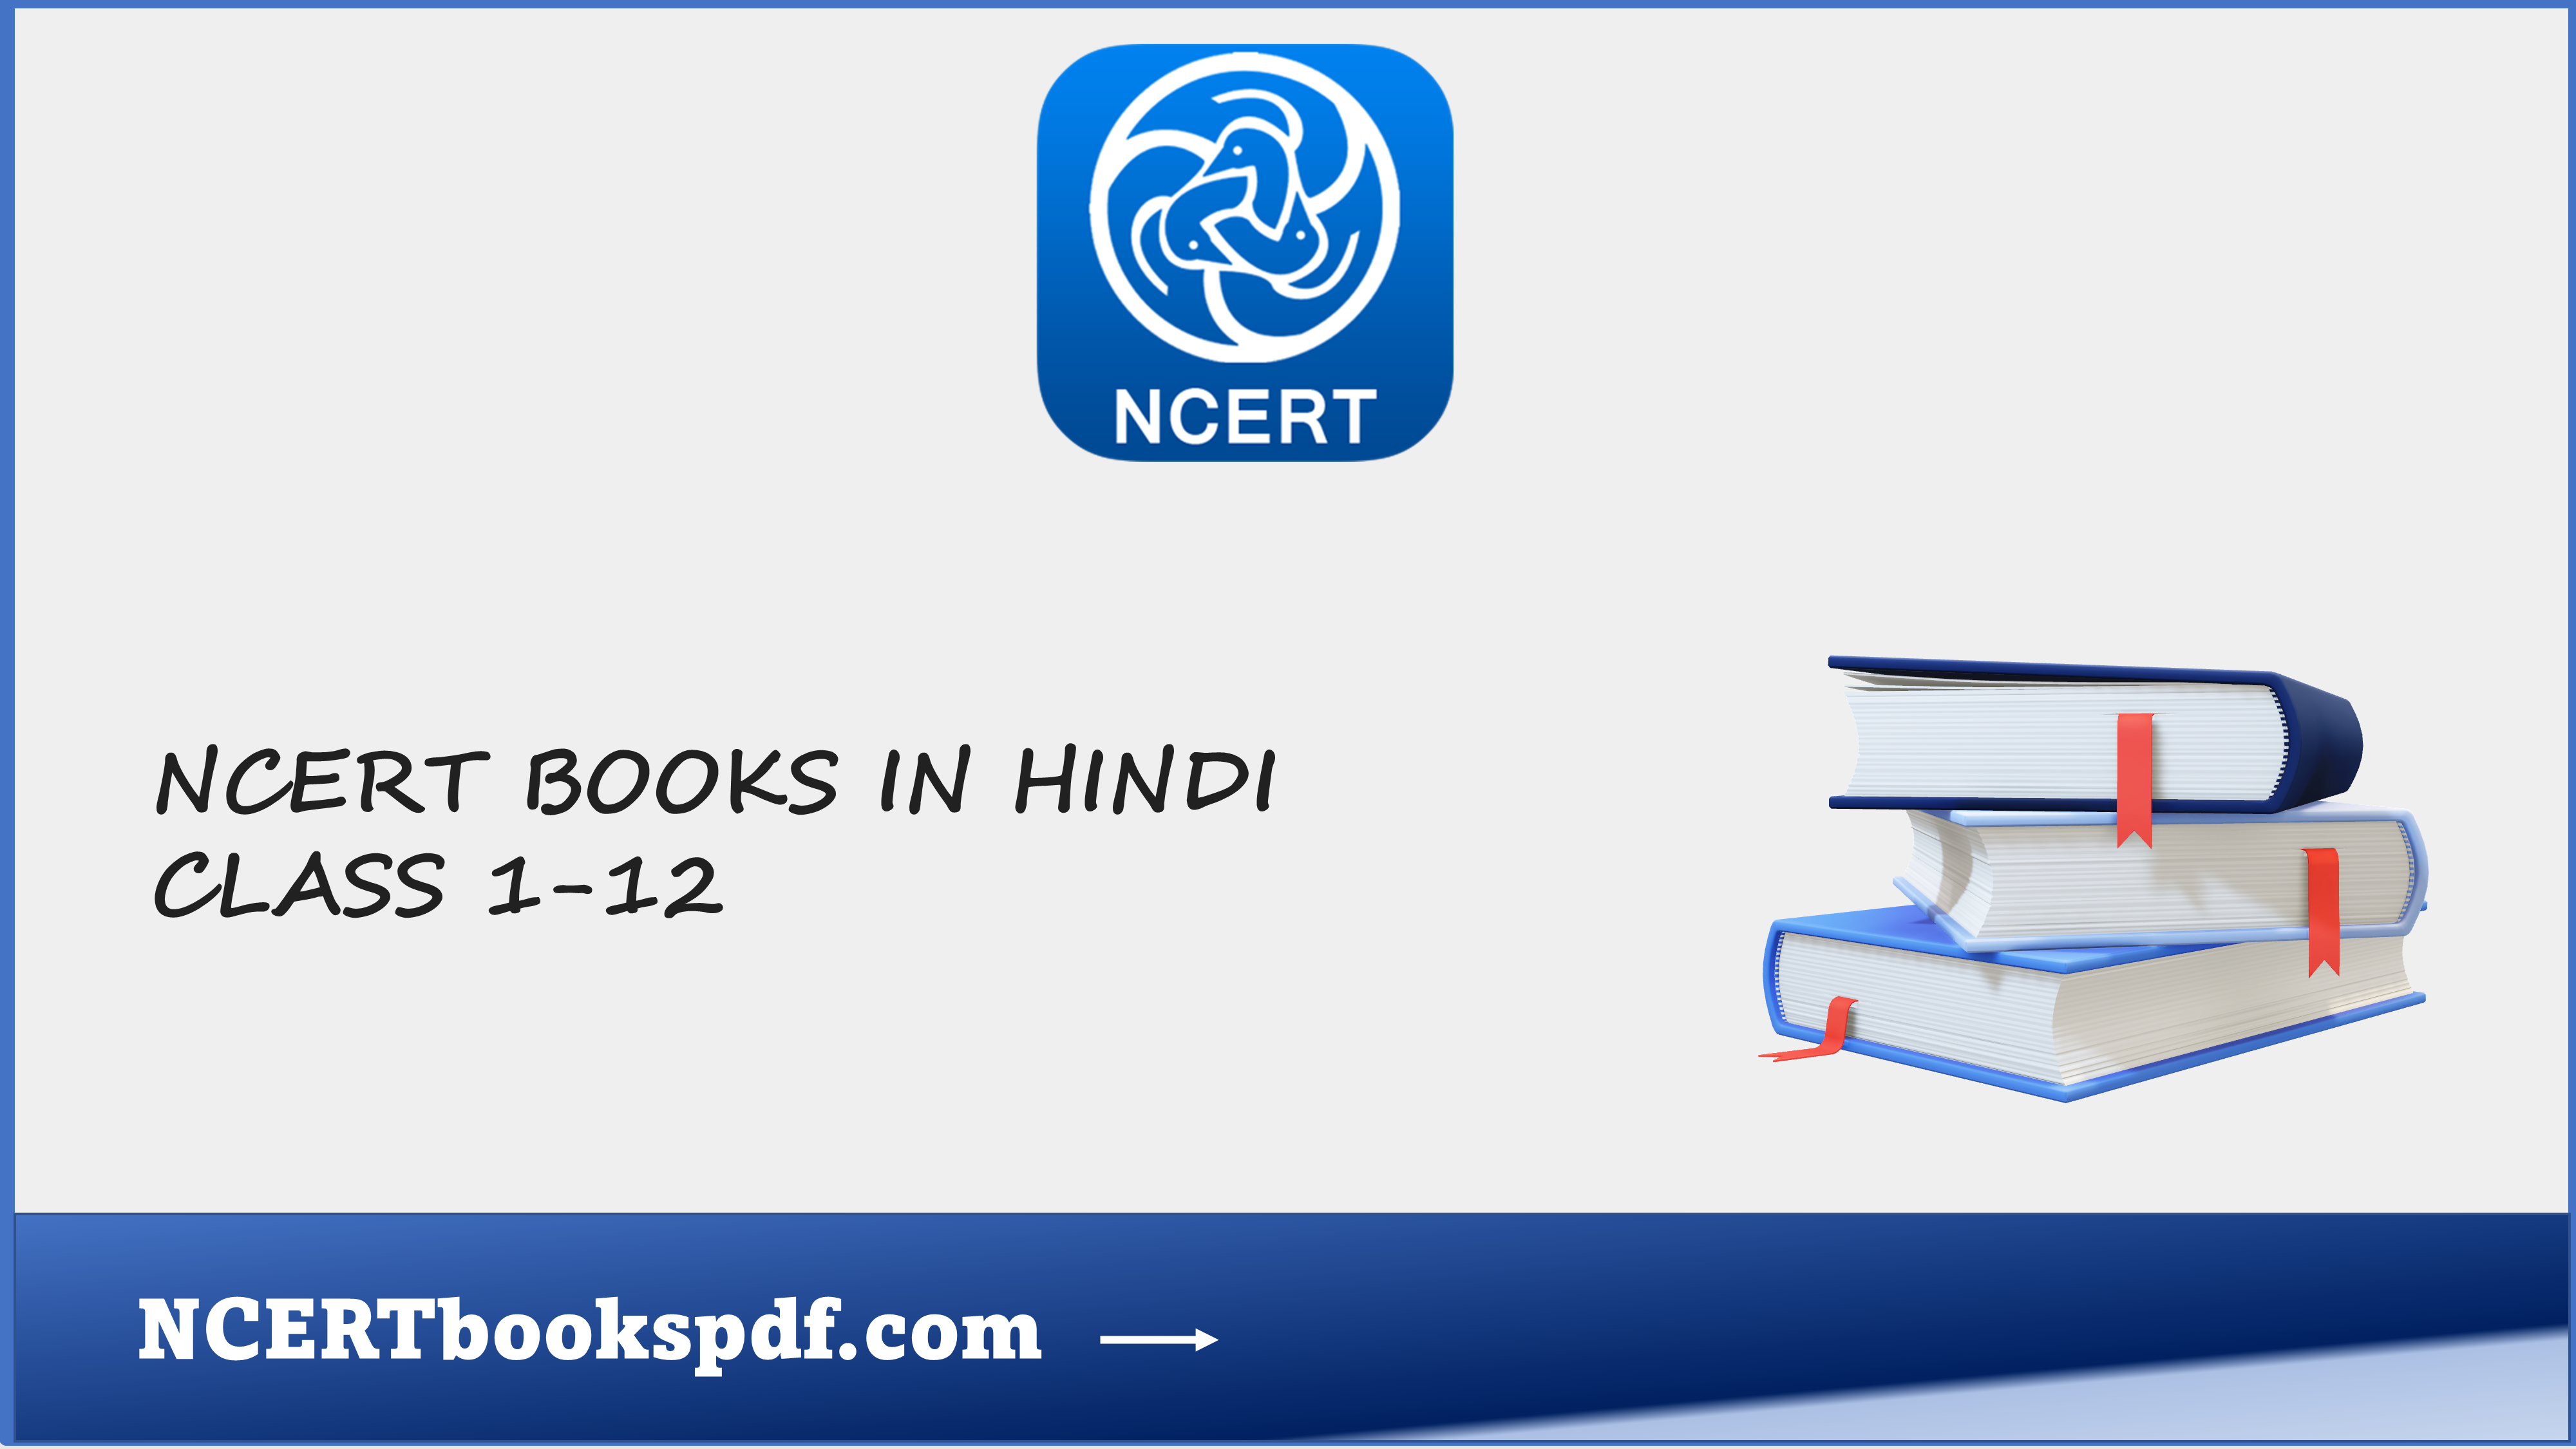 NCERT BOOKS IN HINDI